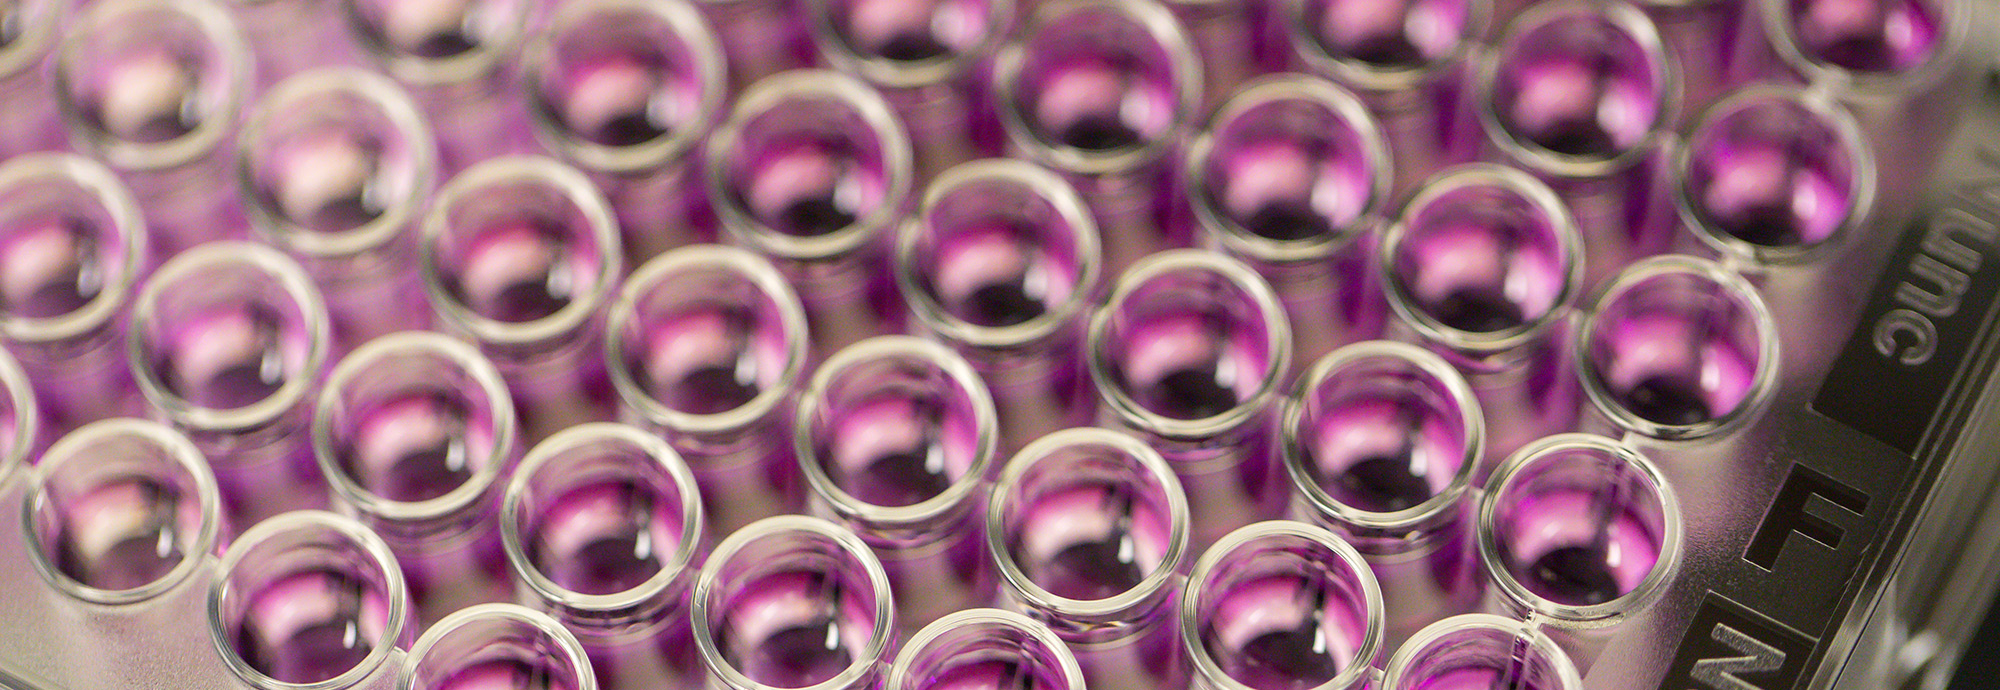 image of test tubes